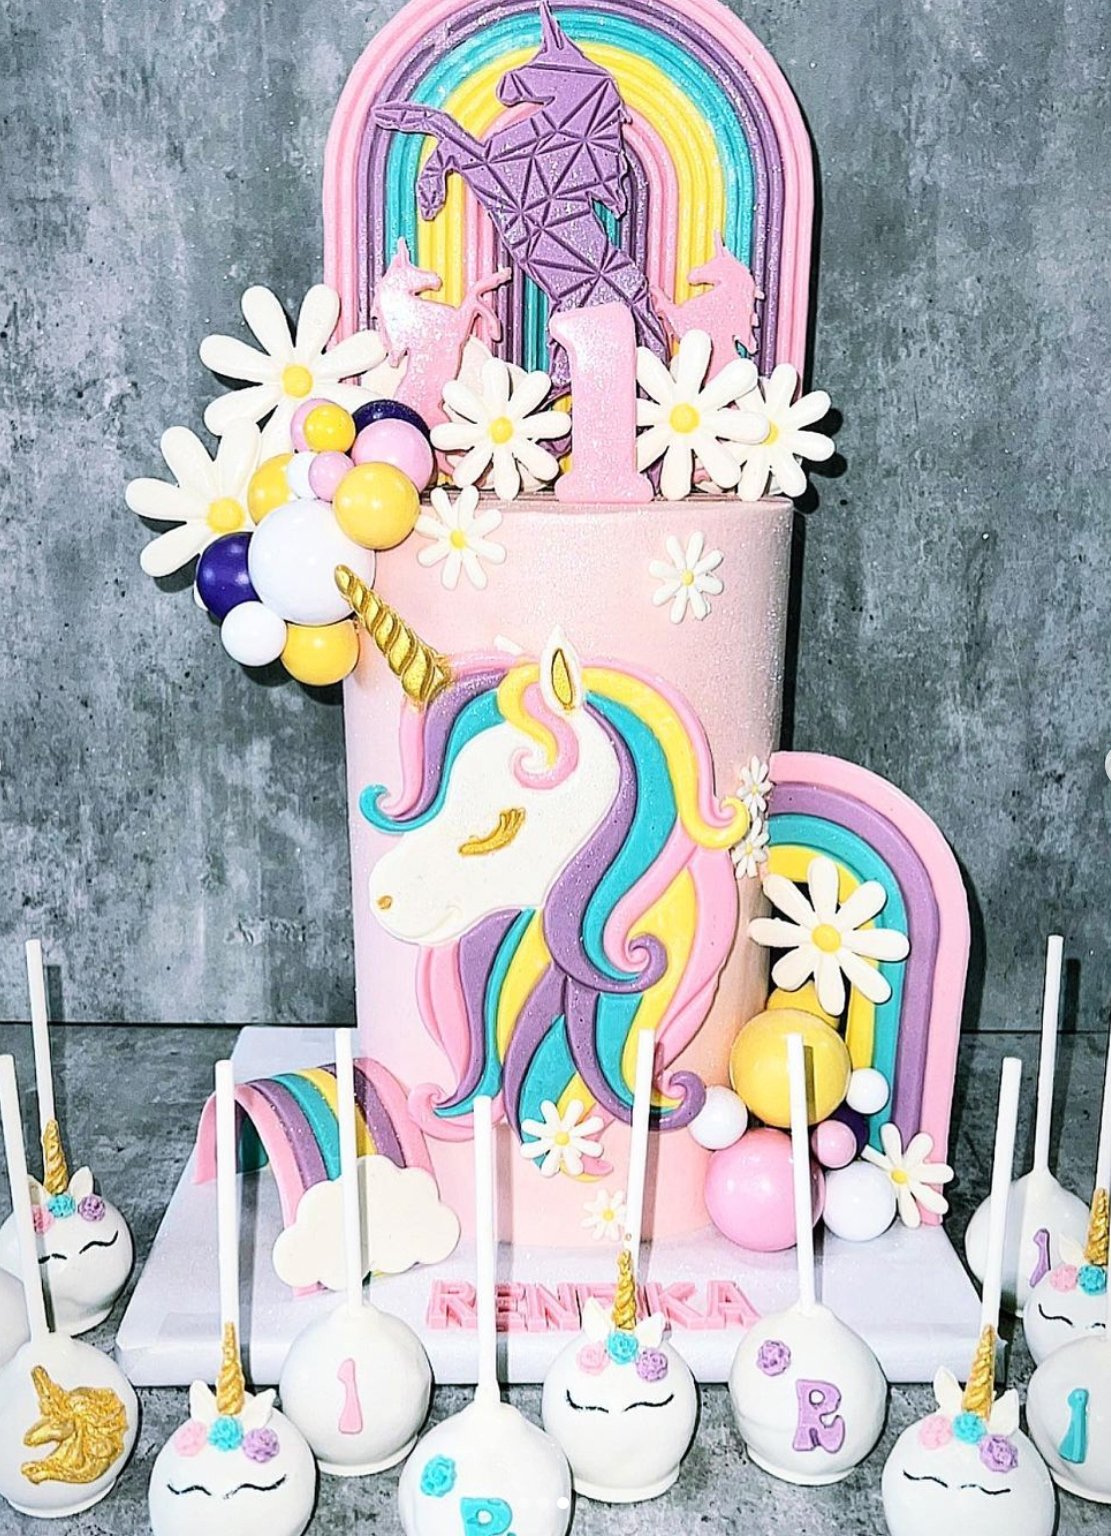 SimasBaking_UnicornVanilla-Cakepops-topped-with-chocolate-and-chocolate-decorations-to-match-birthday-cake.jpg